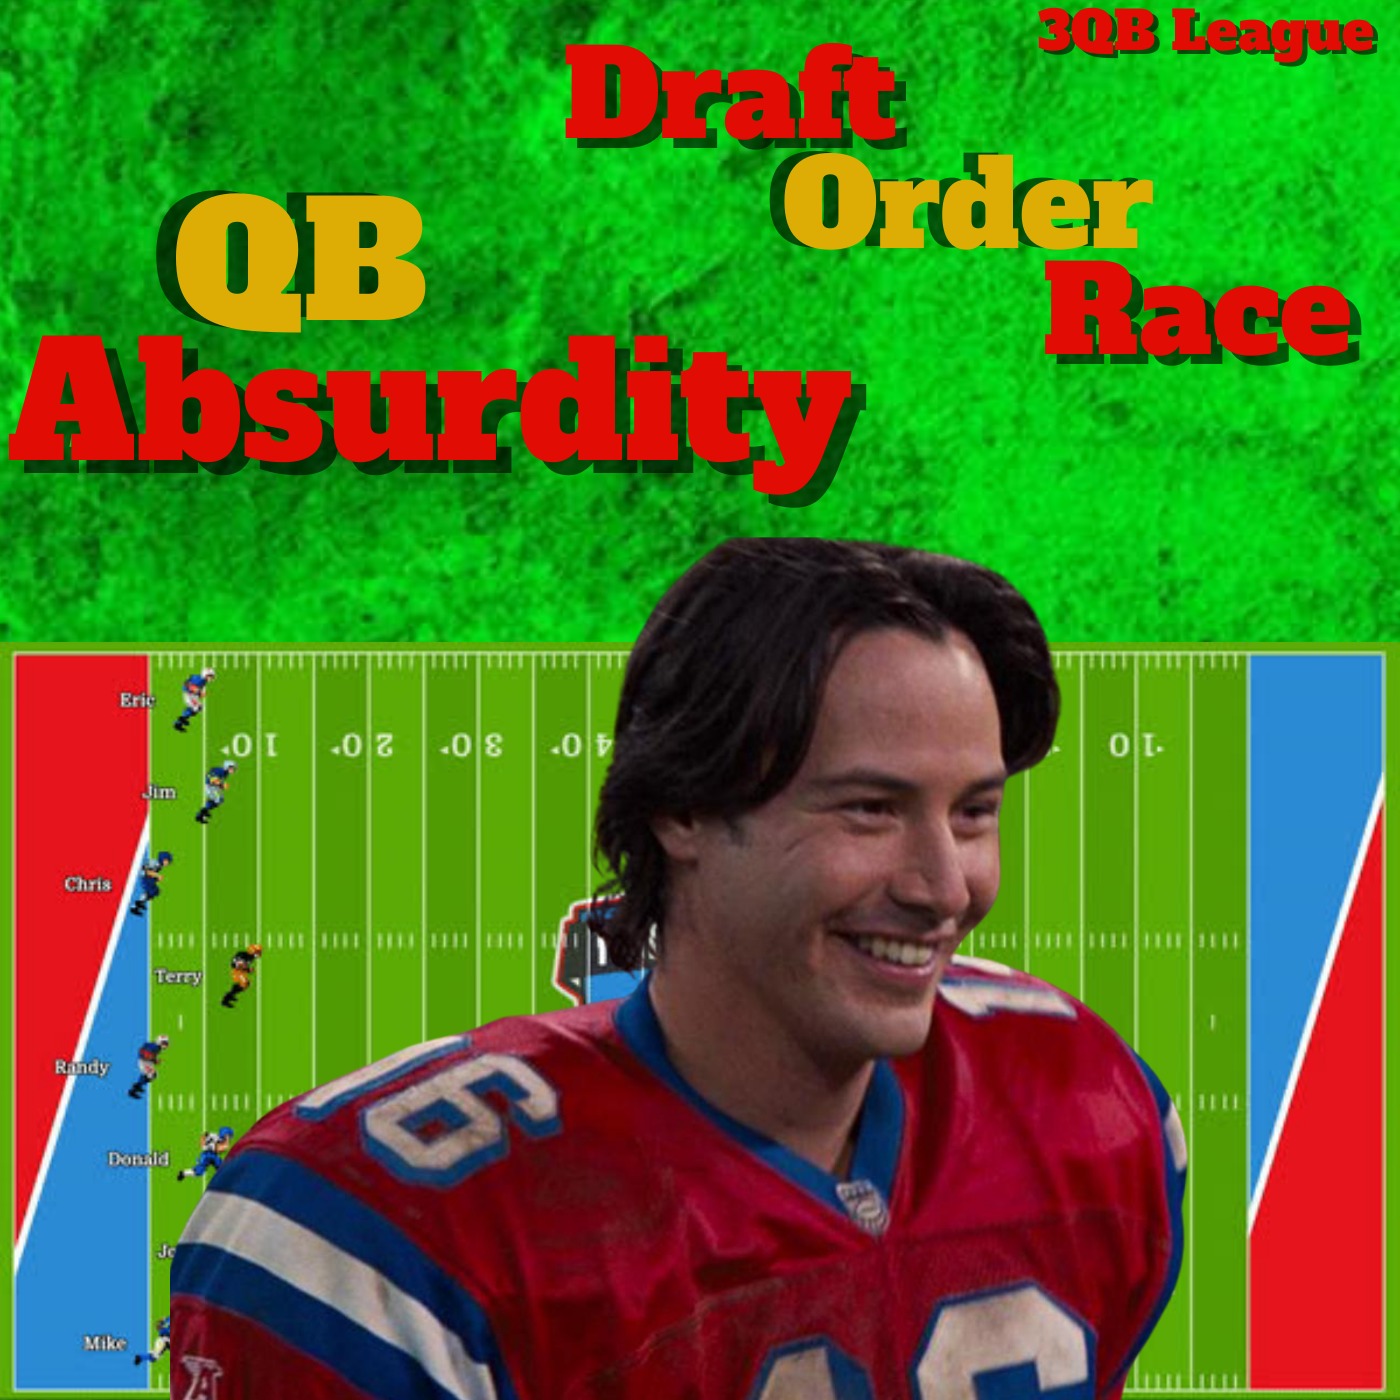 QB Absurdity League Draft Order Race, 3QB League Image